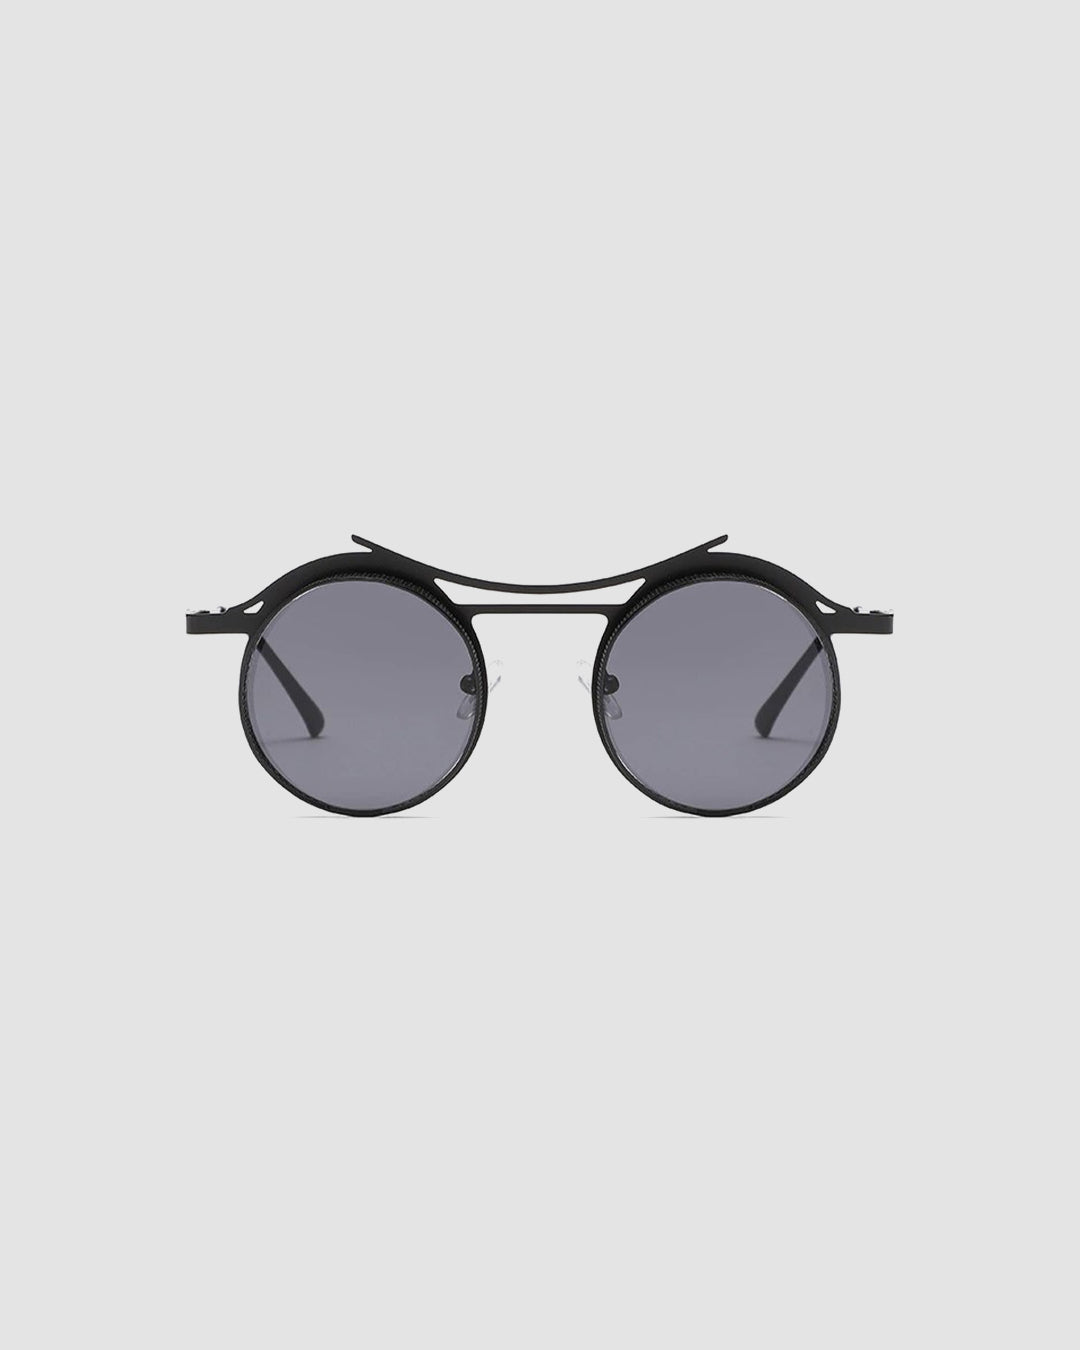 Revolution Sunglasses